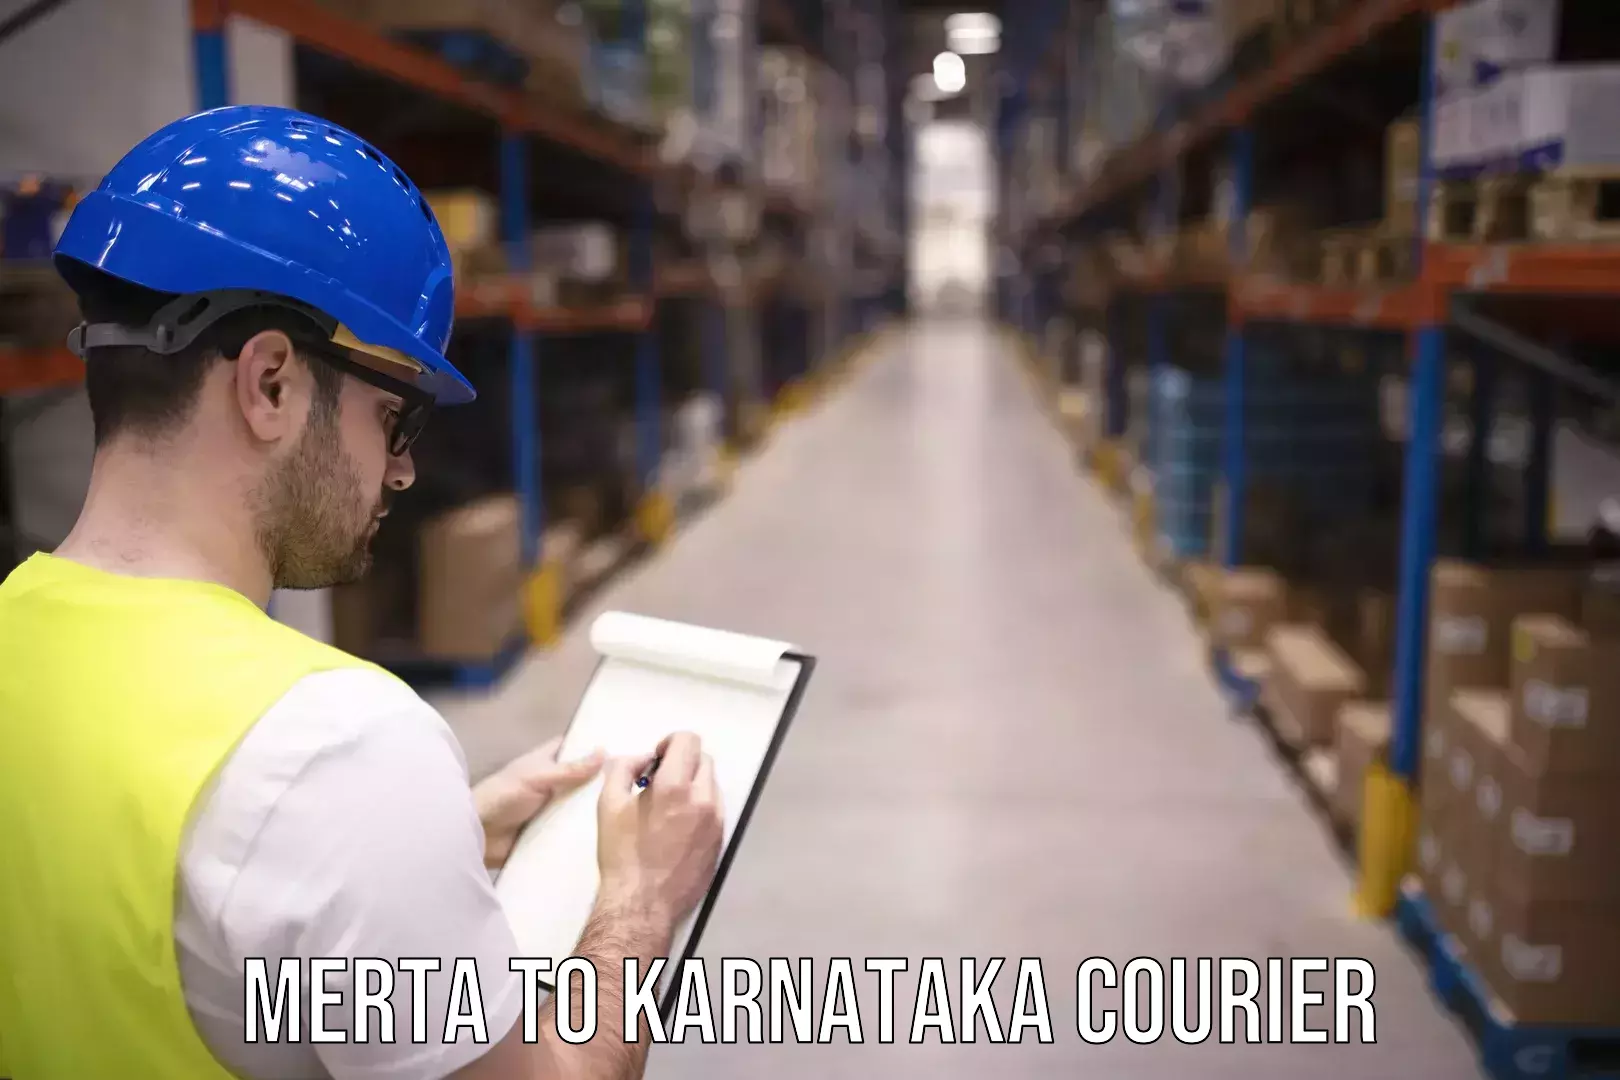 Modern courier technology Merta to Munavalli